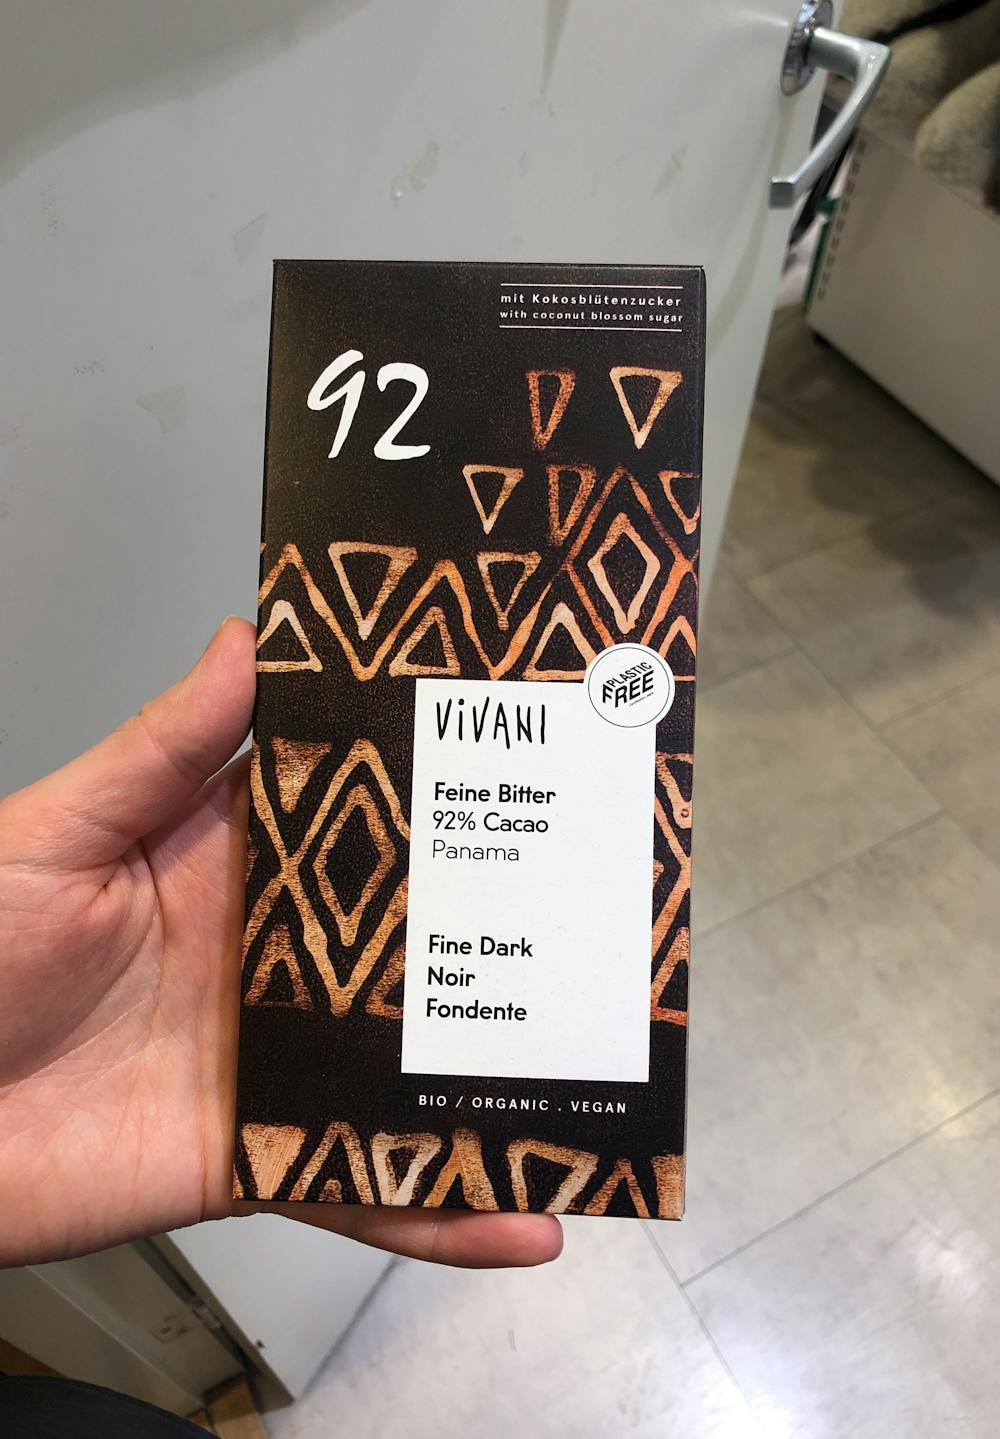 Feine bitter 92% cacao, Vivani